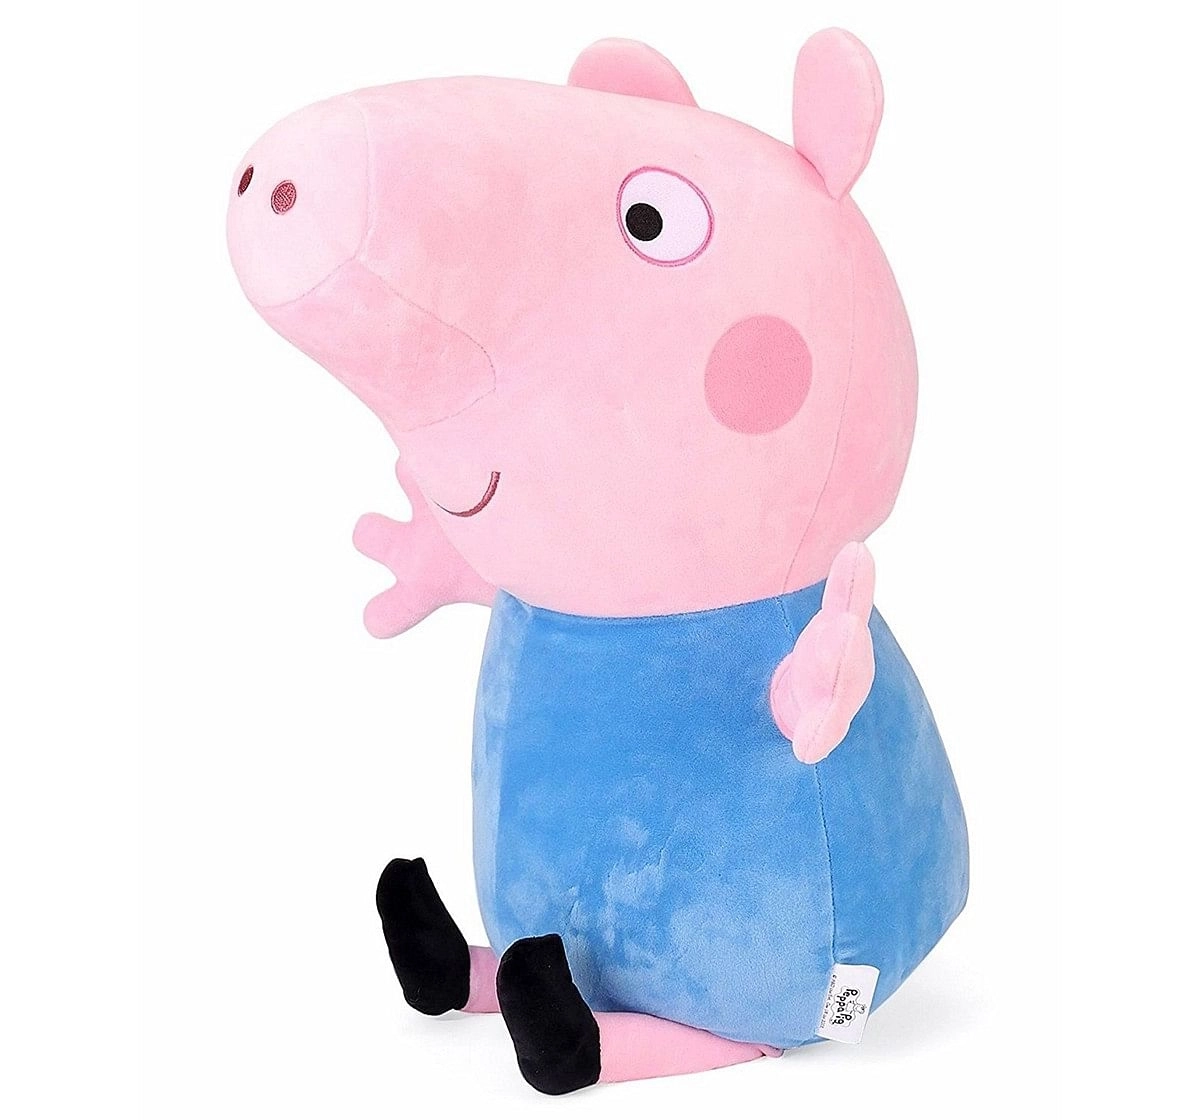 Peppa George Pig 30 Cm Soft Toy for Kids age 2Y+  (Blue)